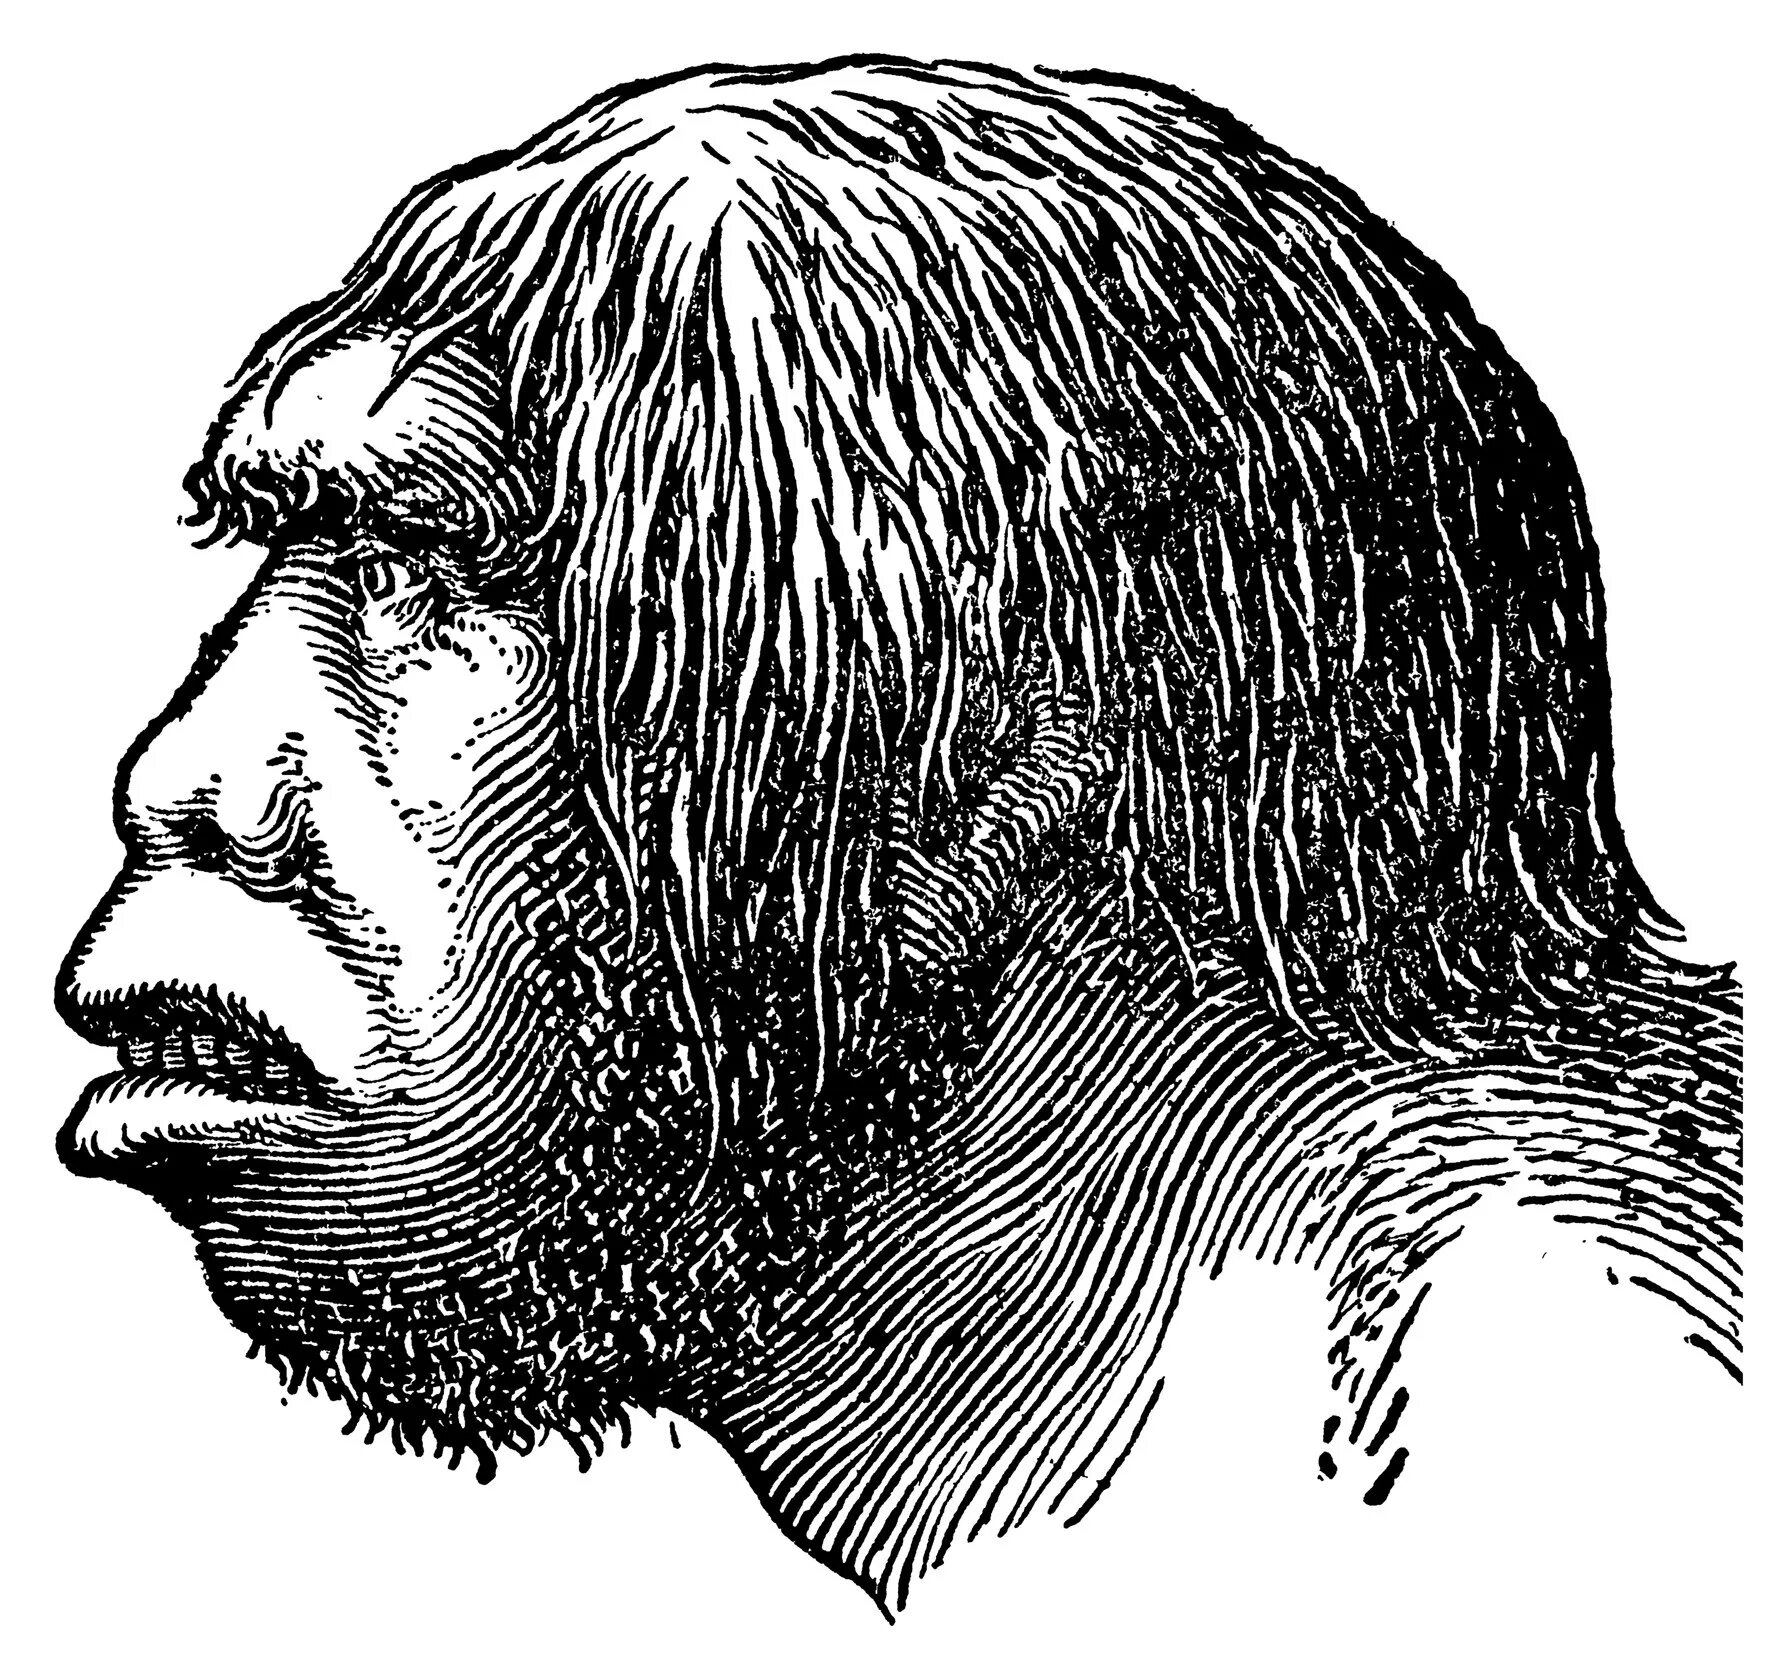 Неандерталец (homo Neanderthalensis) череп. Череп хомо сапиенс в профиль. Хомо сапиенс человек разумный. Хомо сапиенс питекантроп.